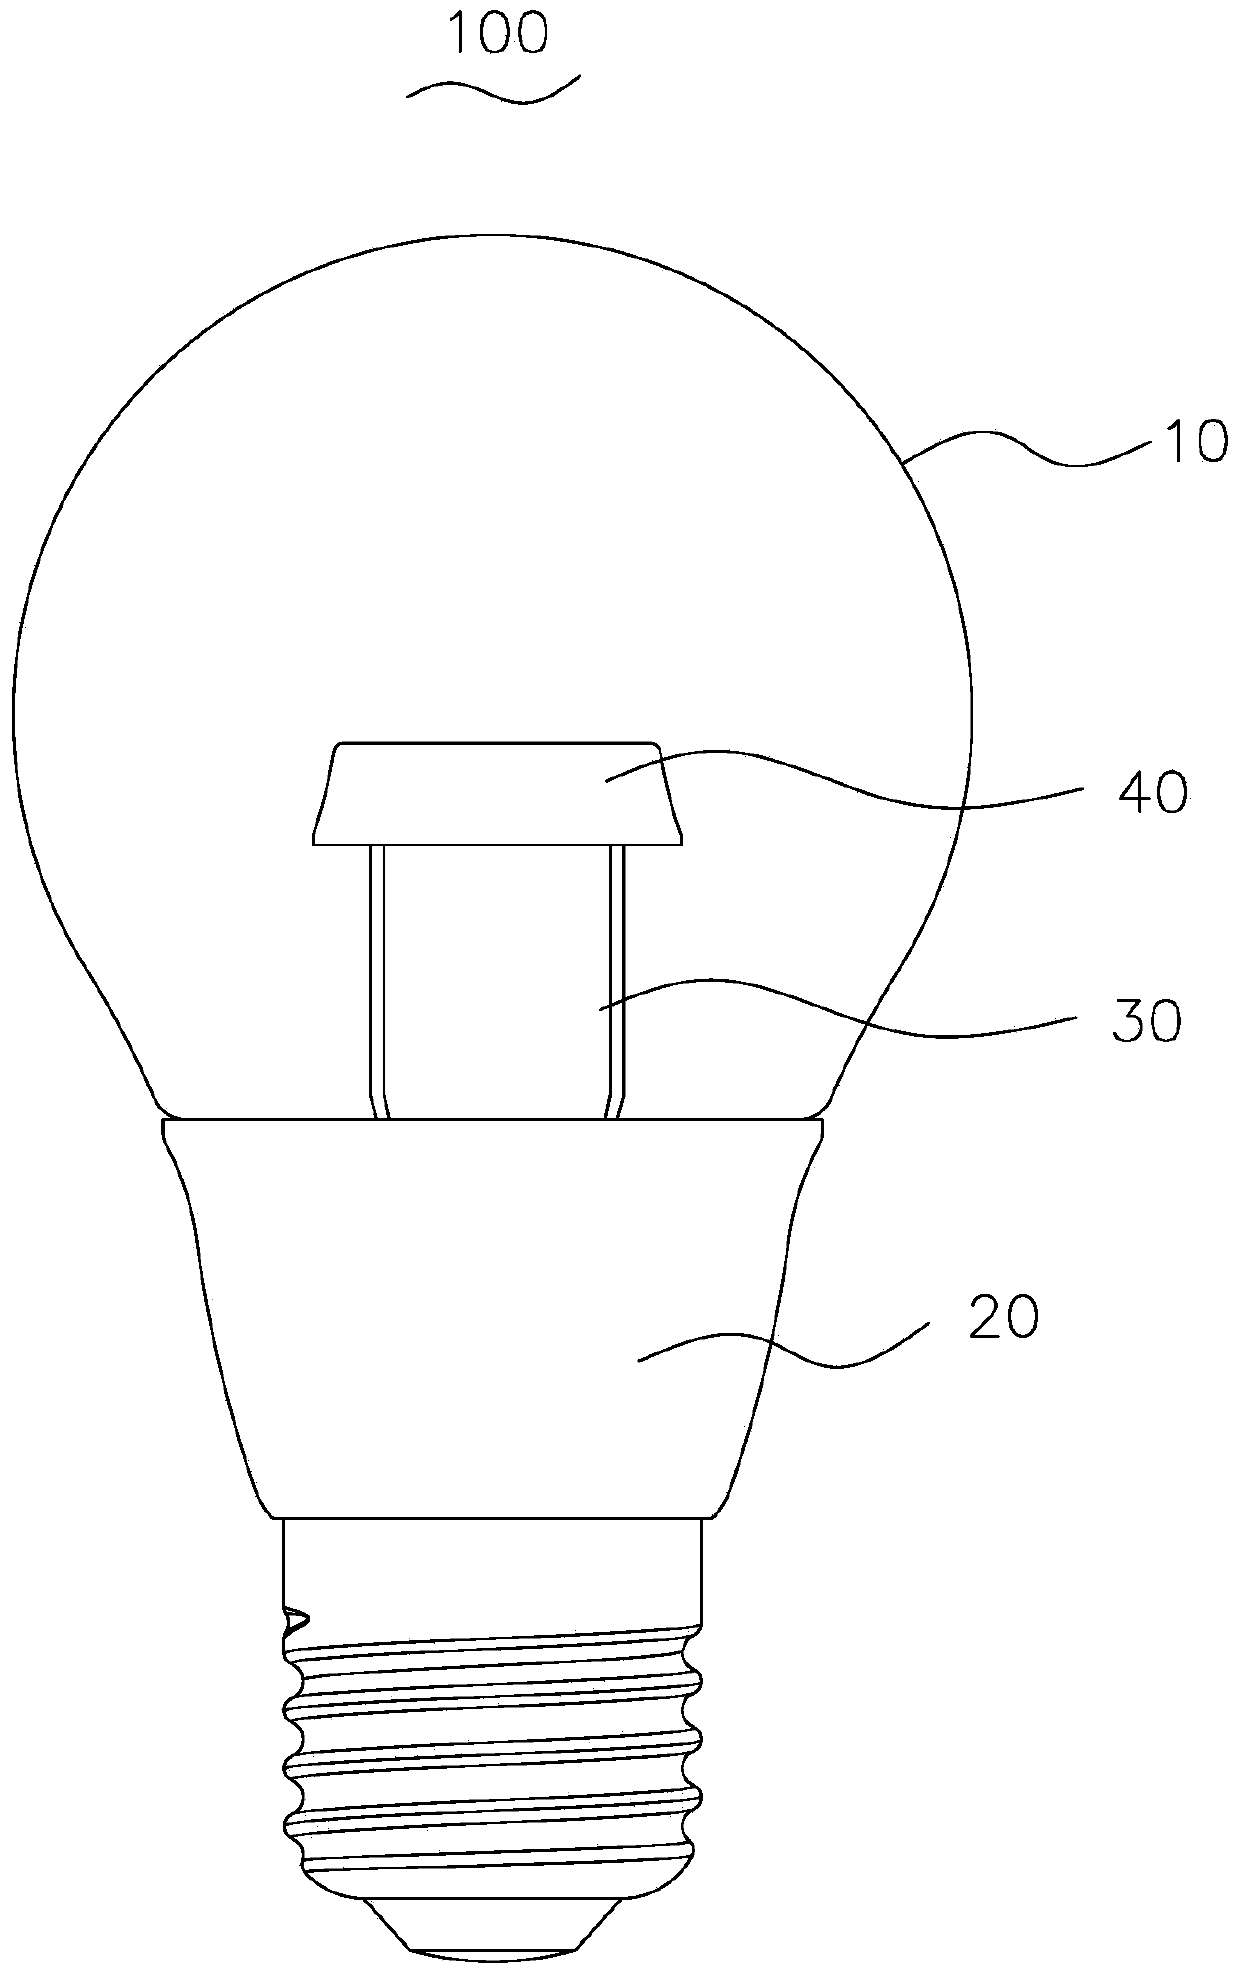 Light-emitting diode (LED) lamp